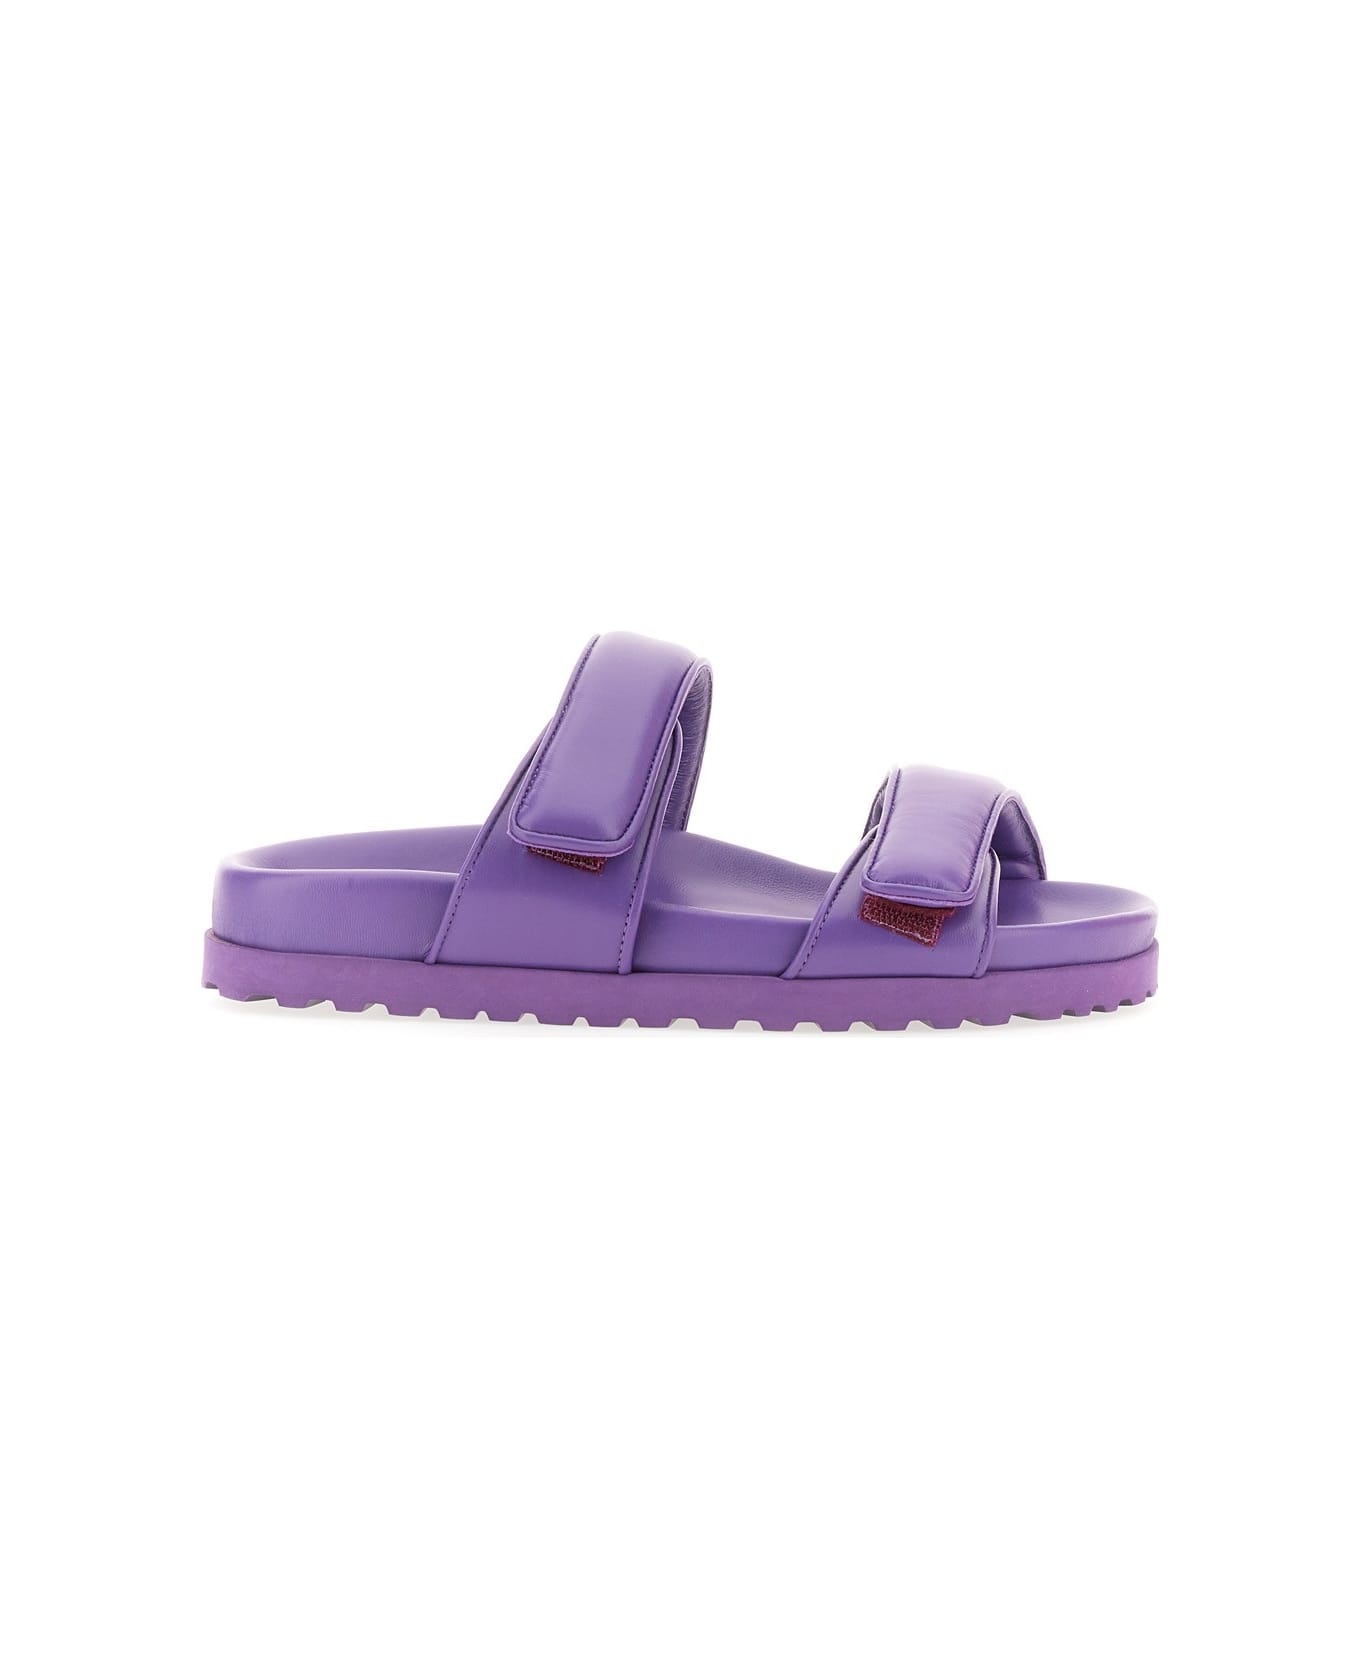 GIA BORGHINI Sandal Perni 11 Gia X Pernille Teisbaek - Purple